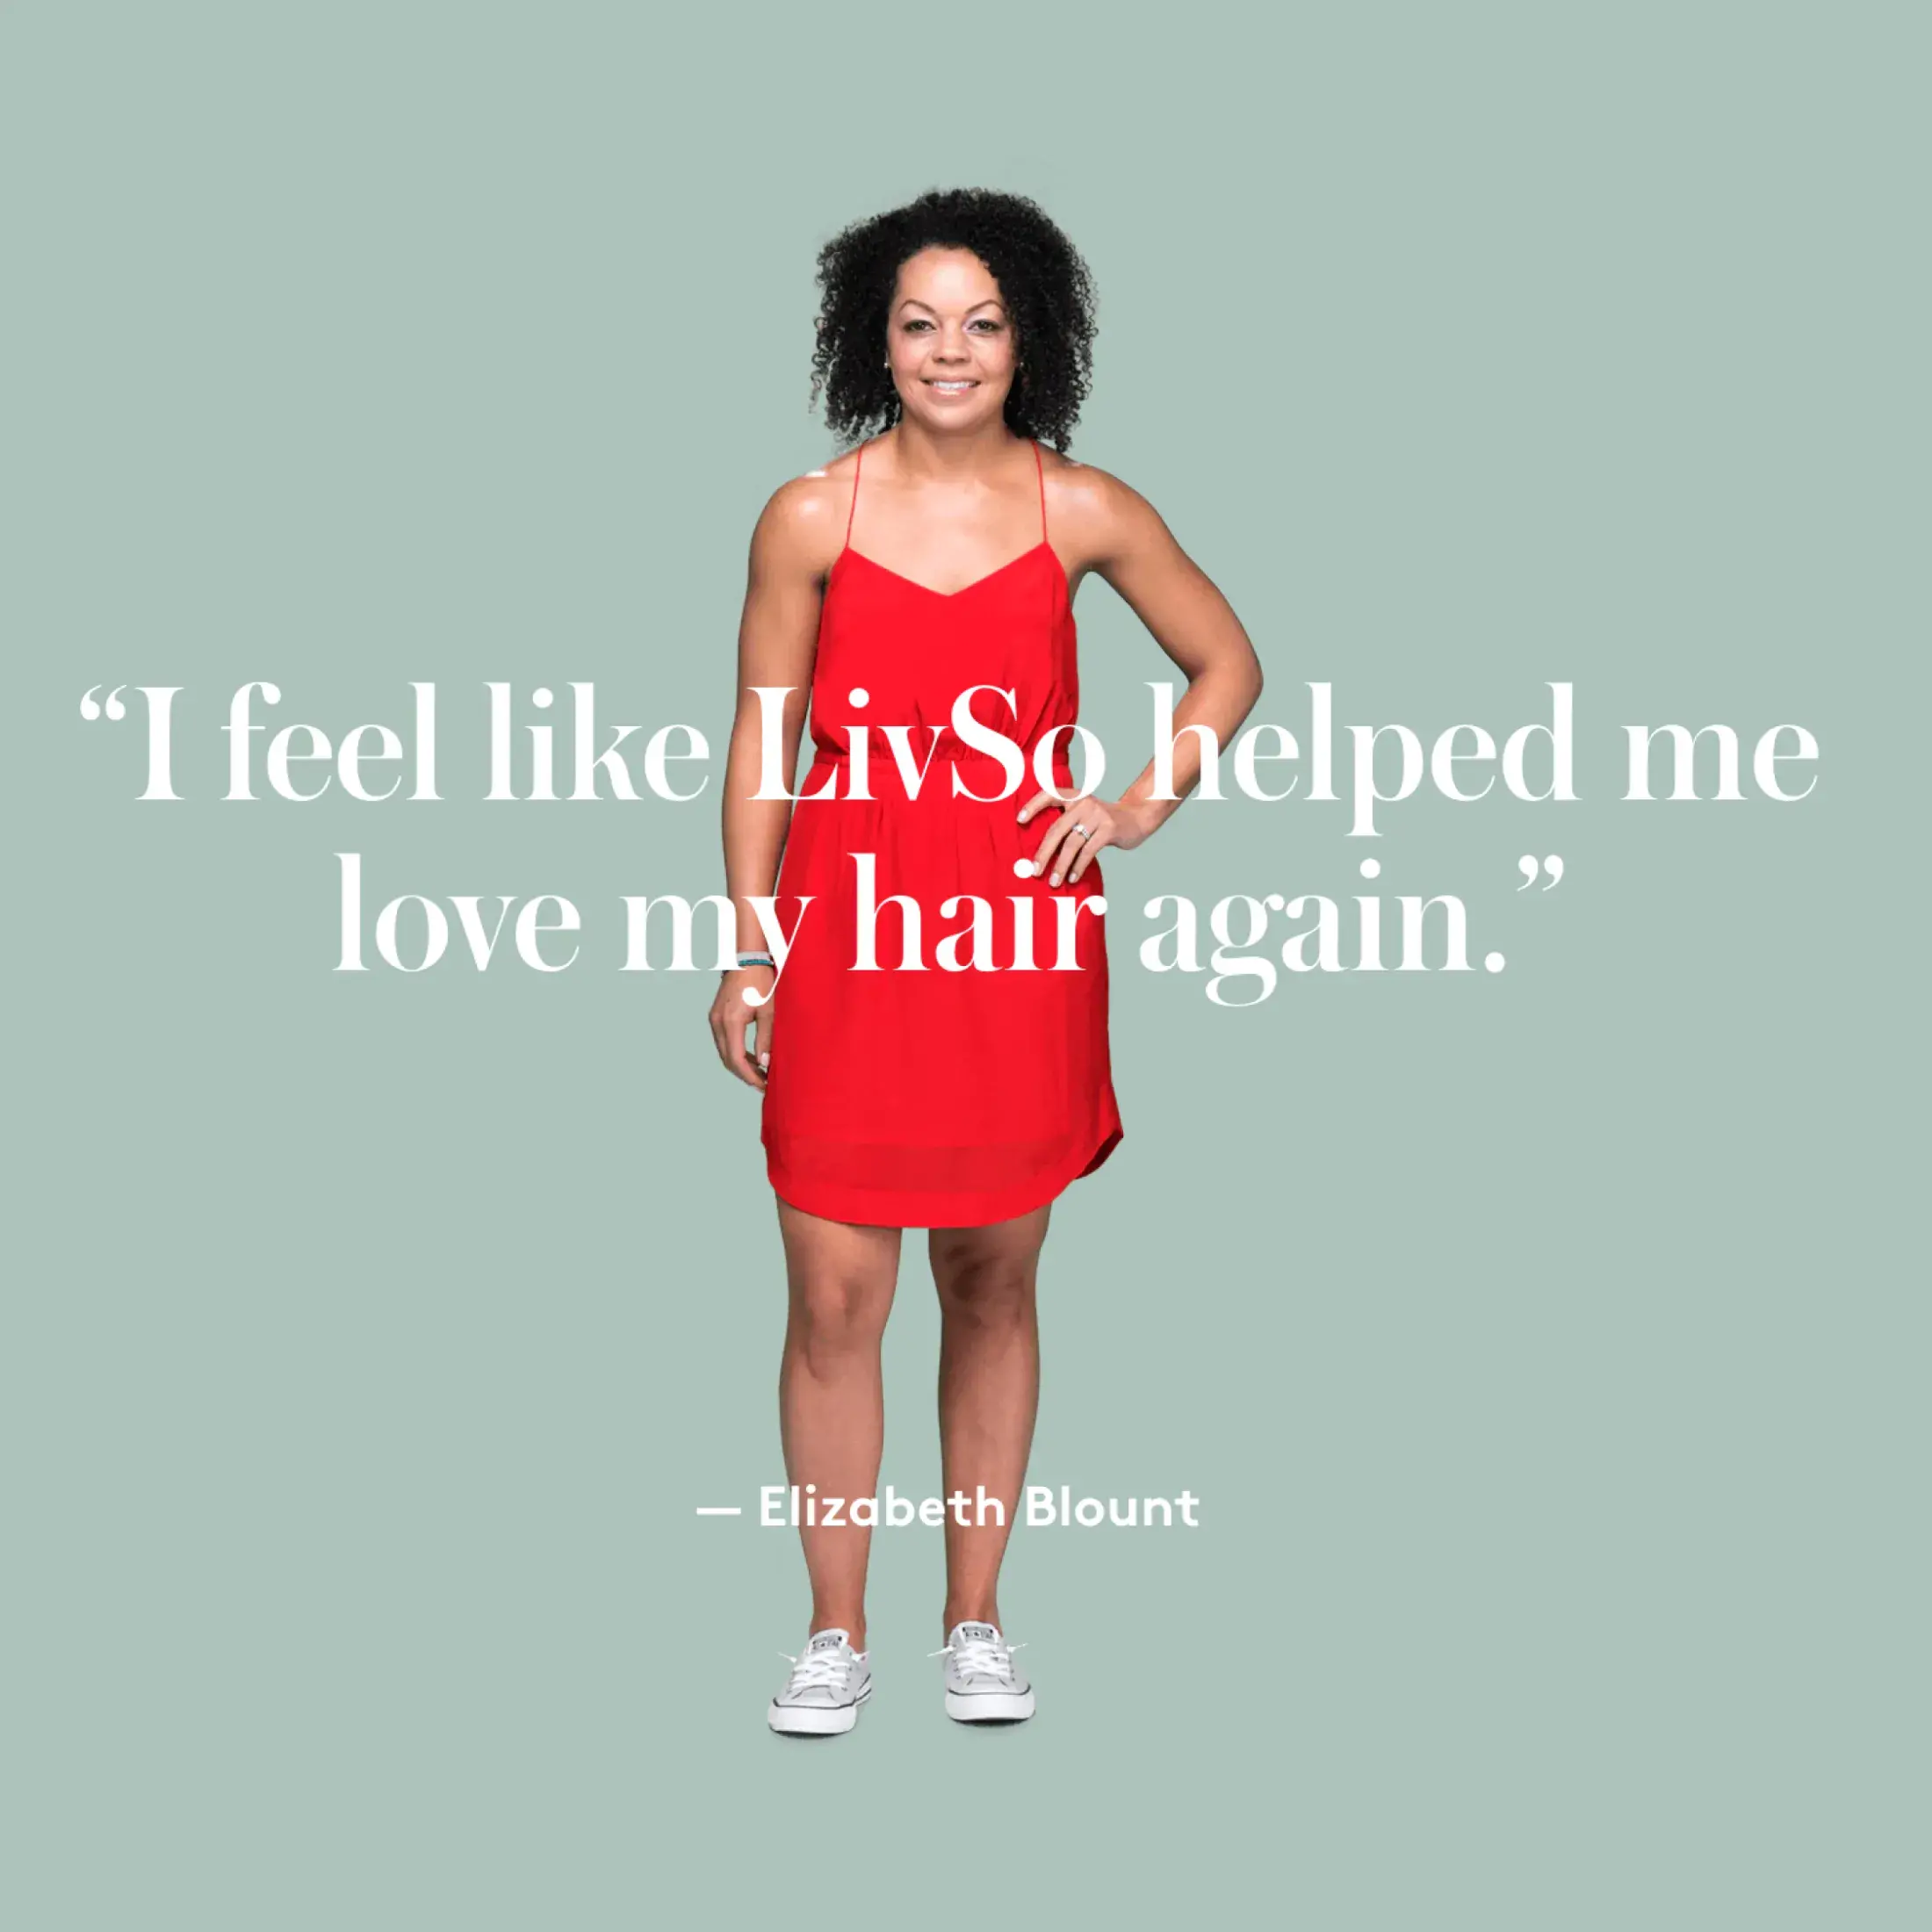 Elizabeth Blount "I feel like LivSo helped me love my hair again."